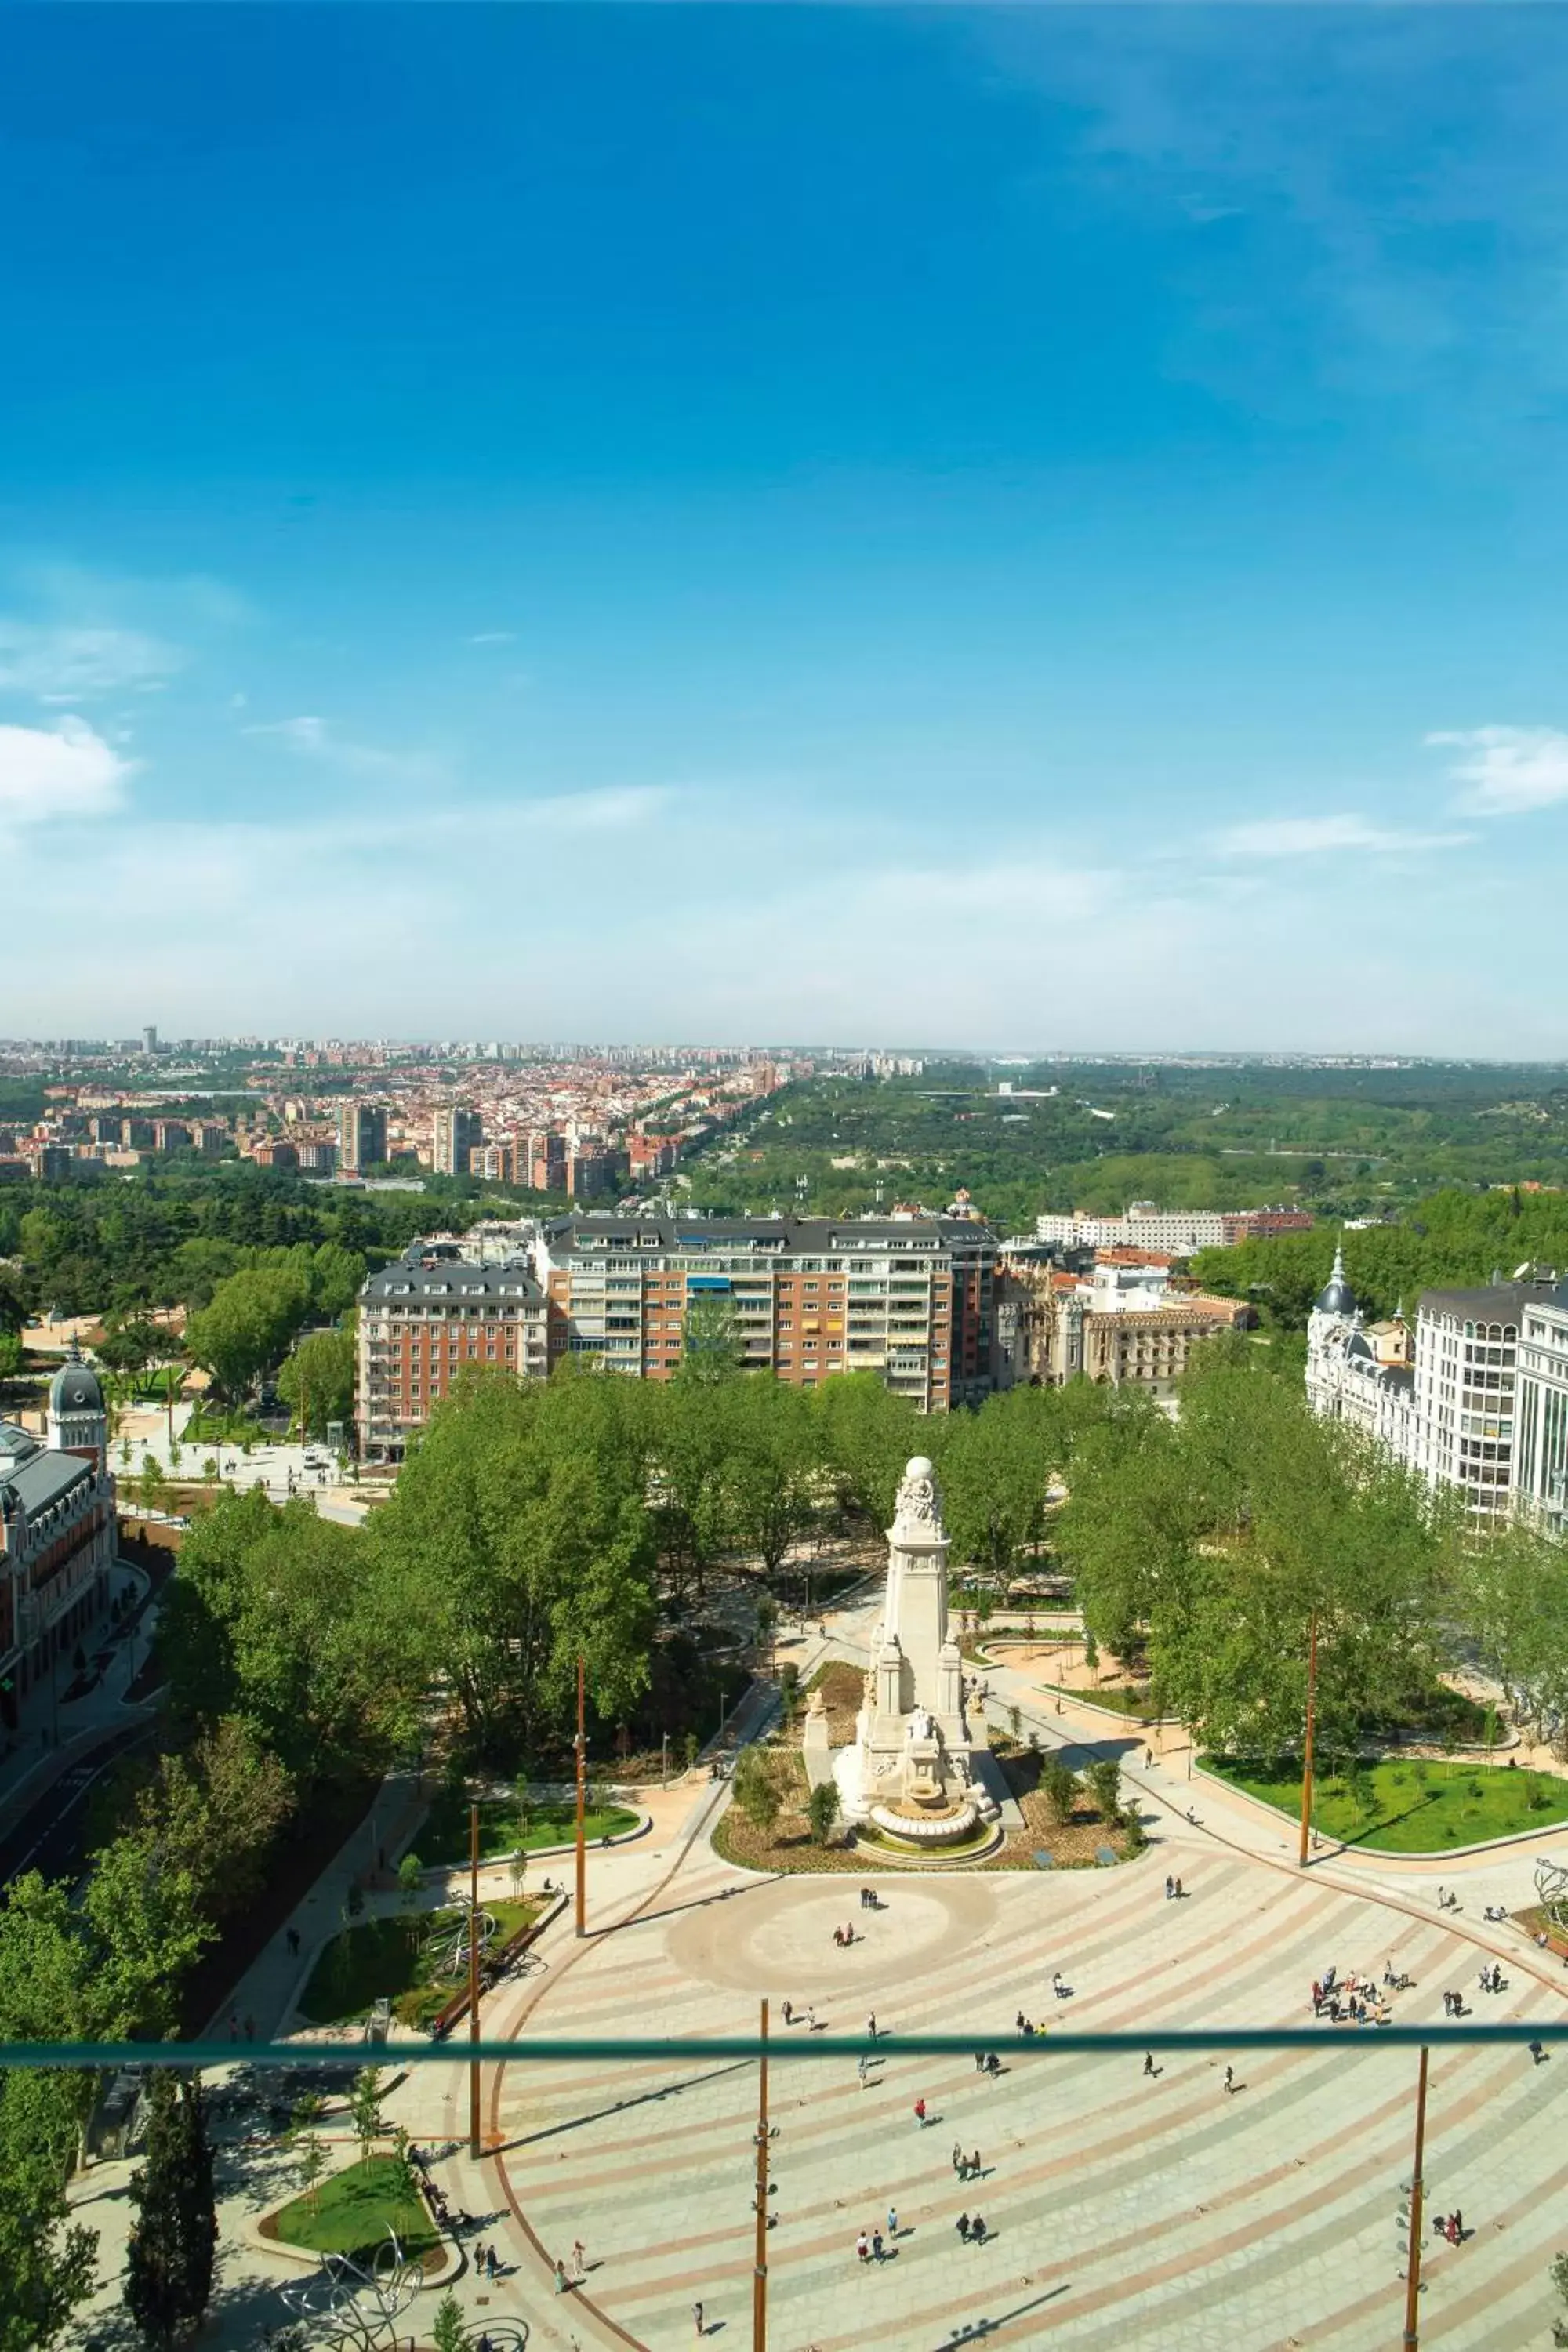 City view in Riu Plaza España